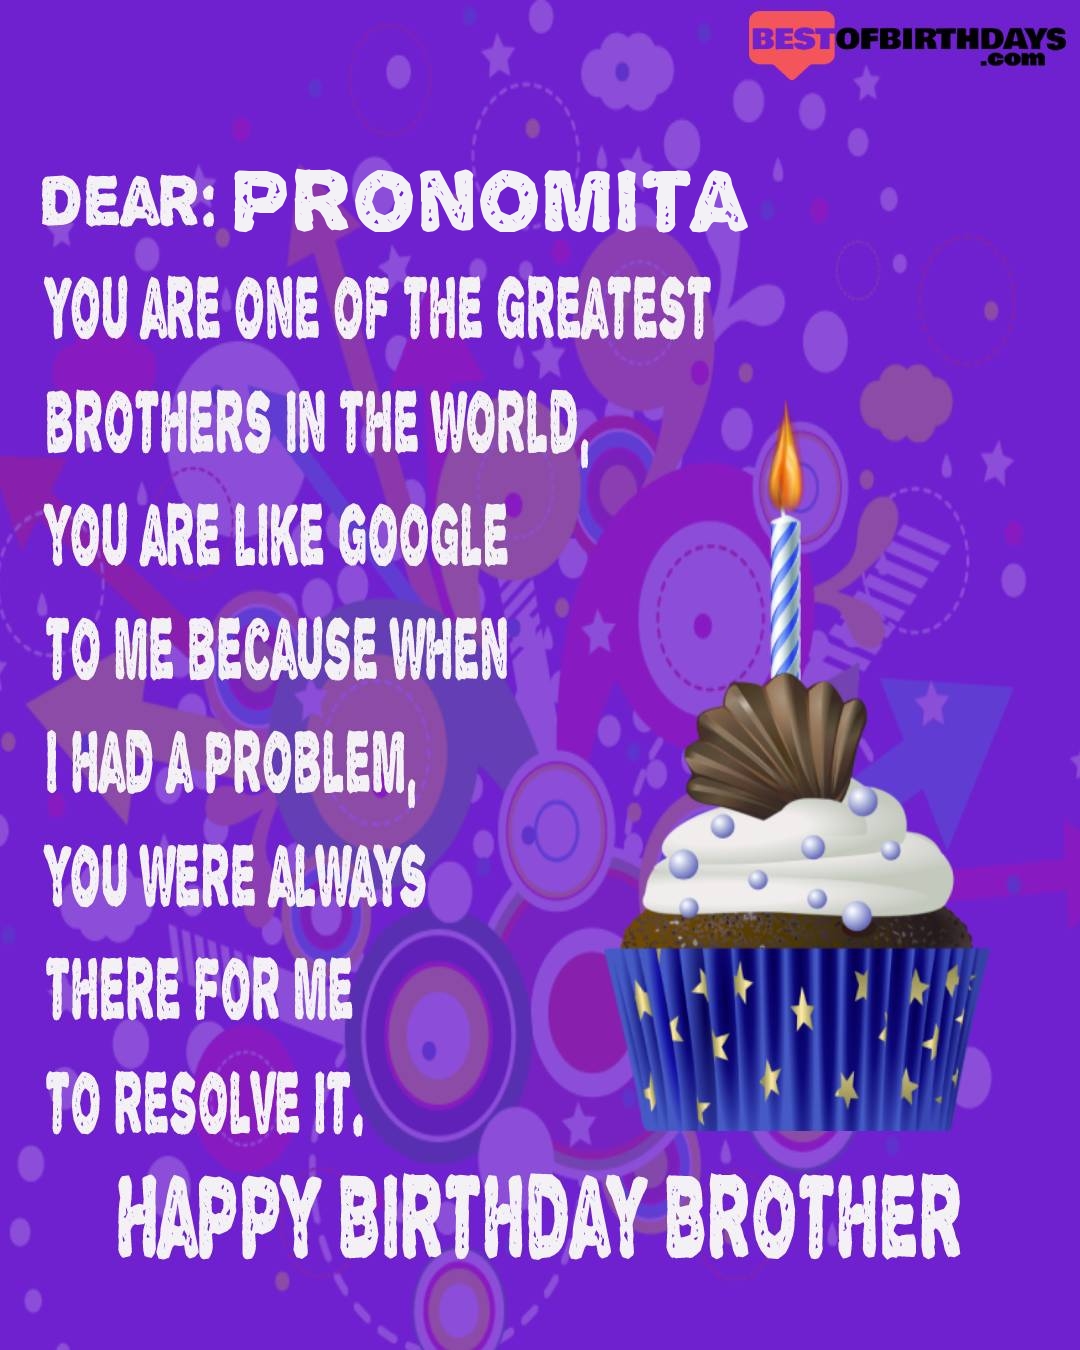 Happy birthday pronomita bhai brother bro